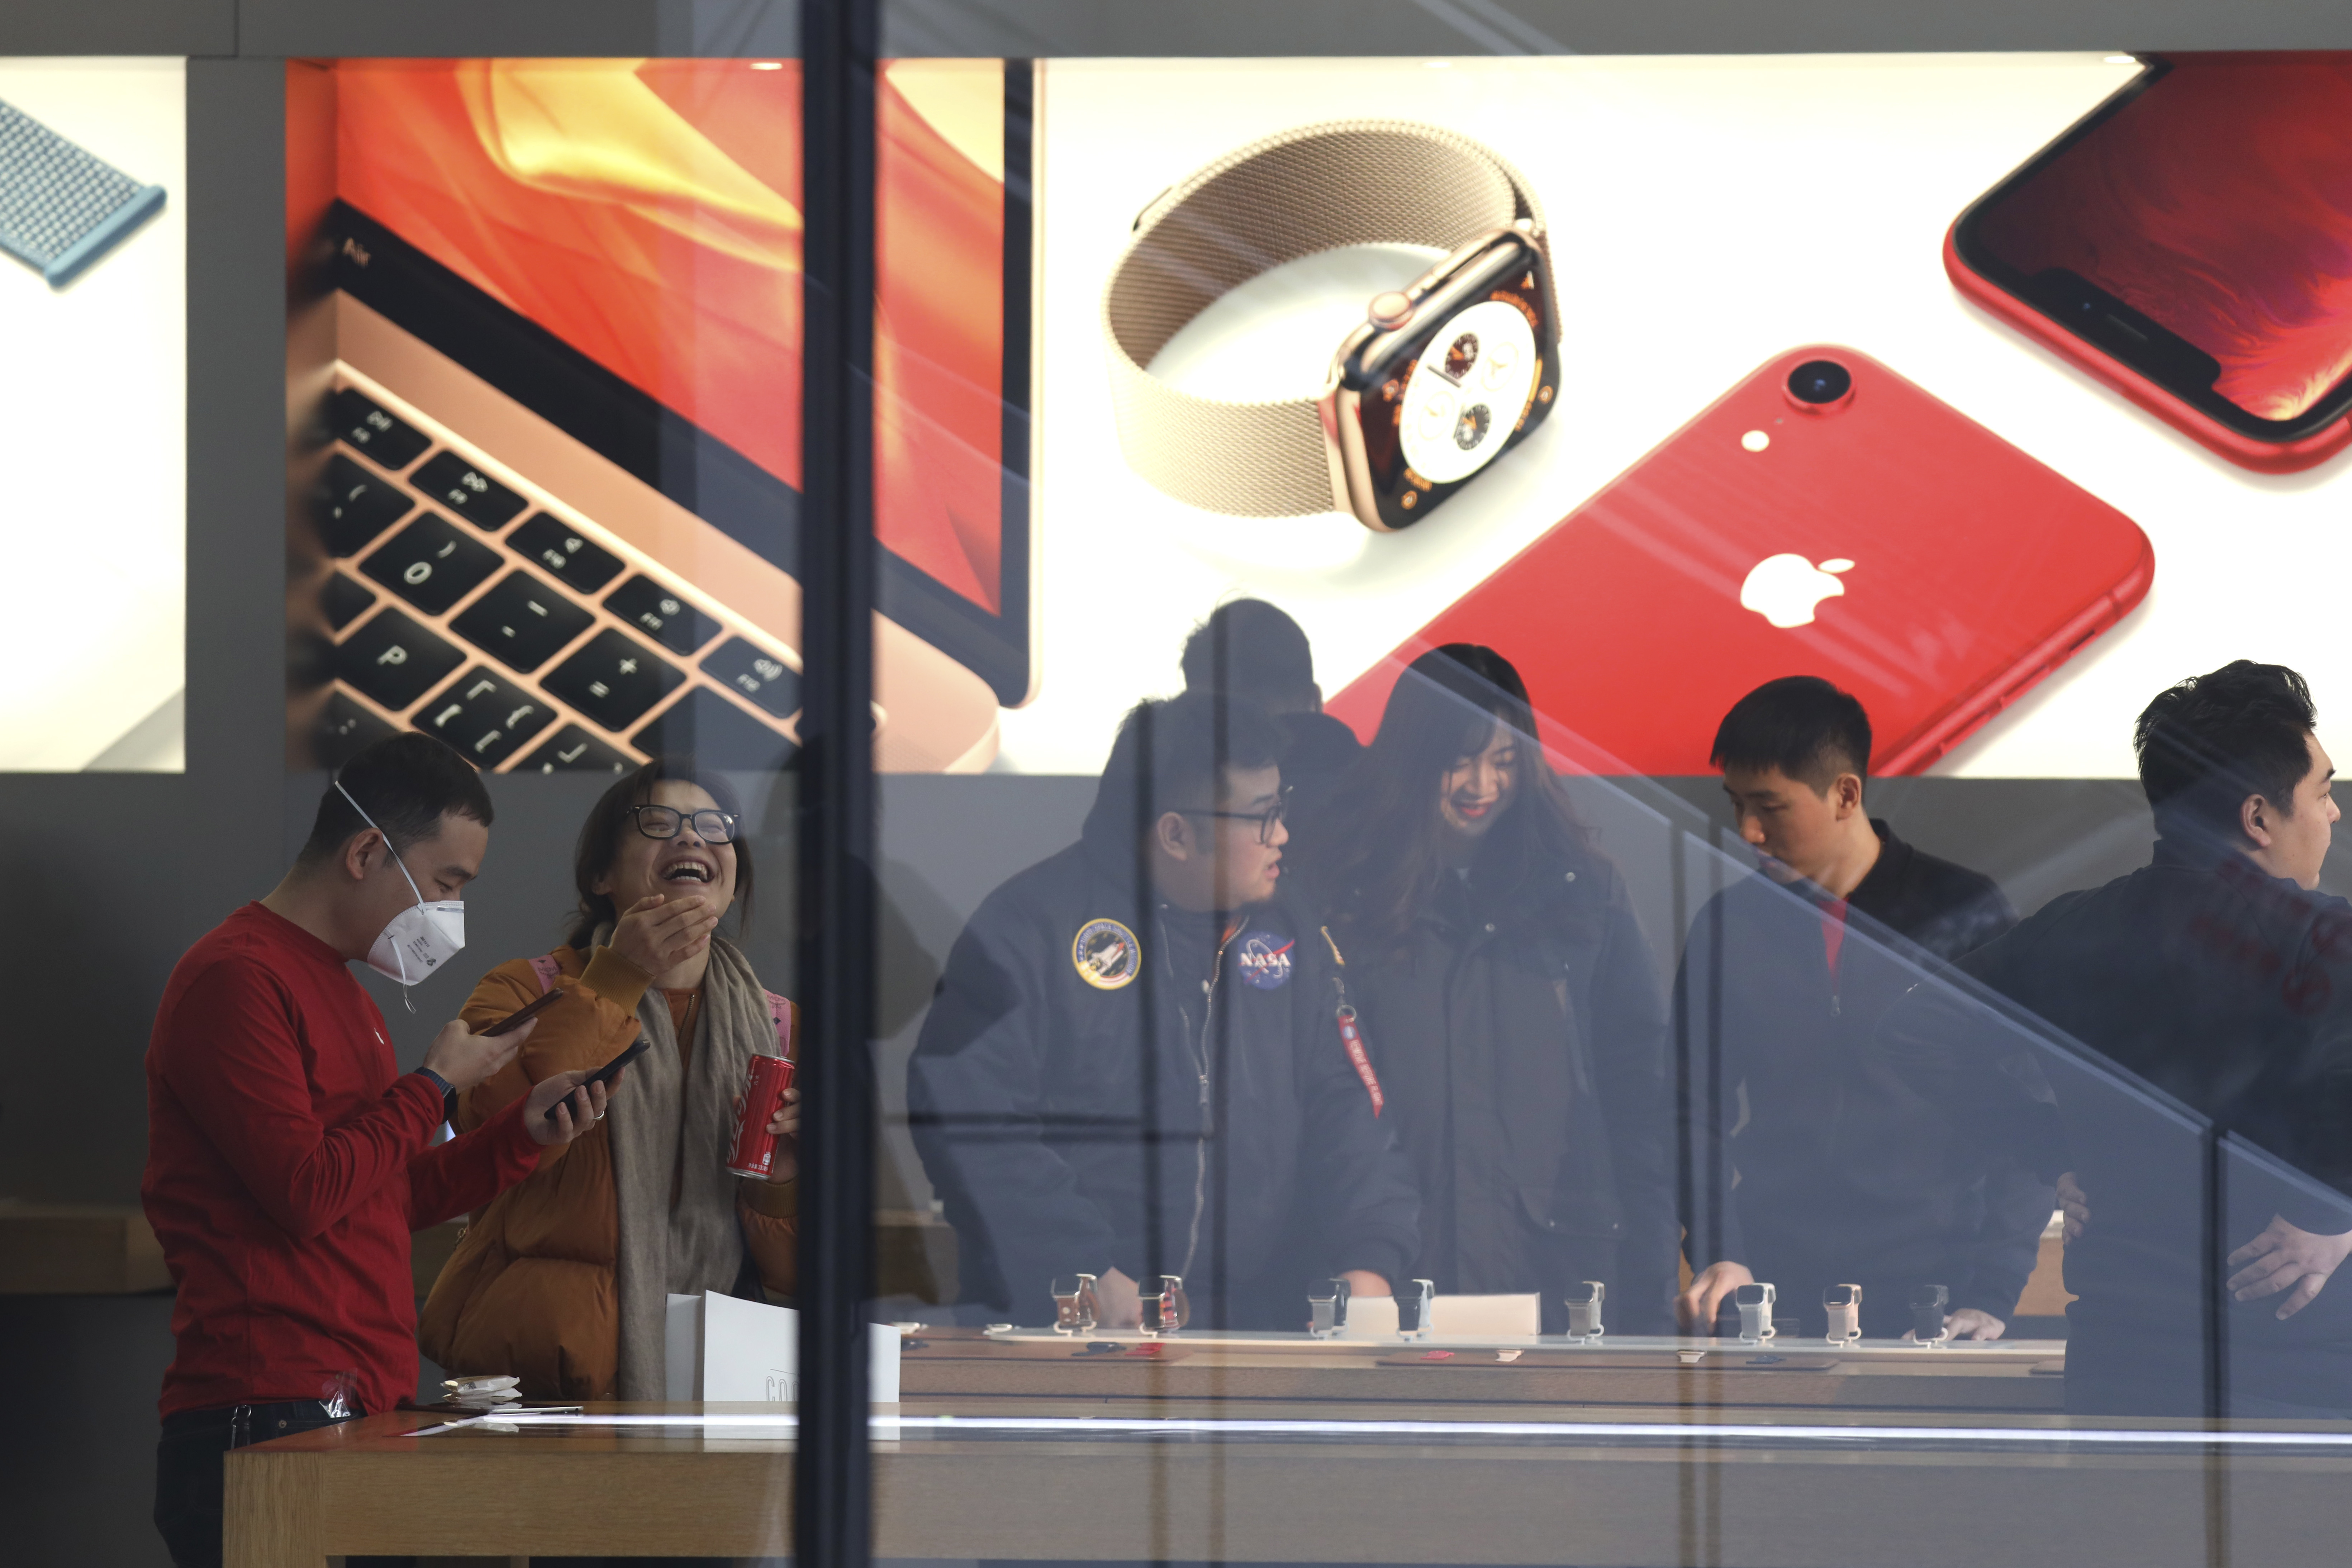 jammer gun parts group , Waning iPhone Demand Highlights Chinese Consumer Anxiety